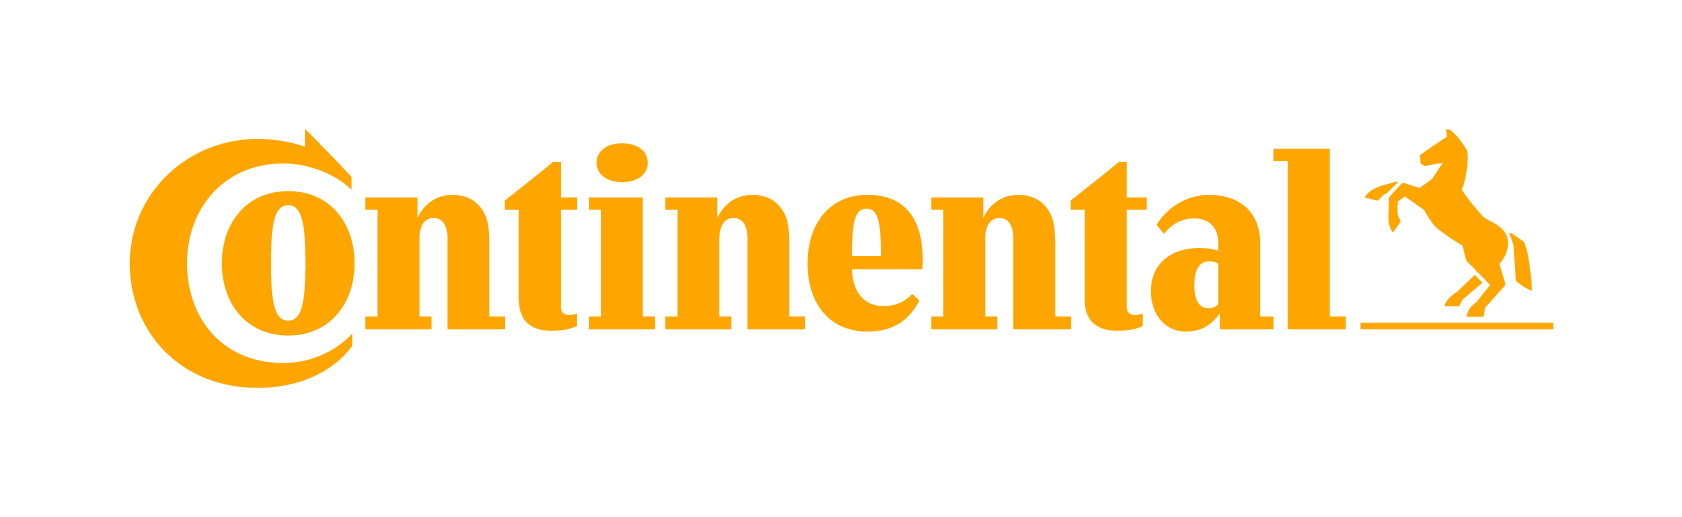 continental_logo_yellow_srgb_png-data_1391442108.jpg